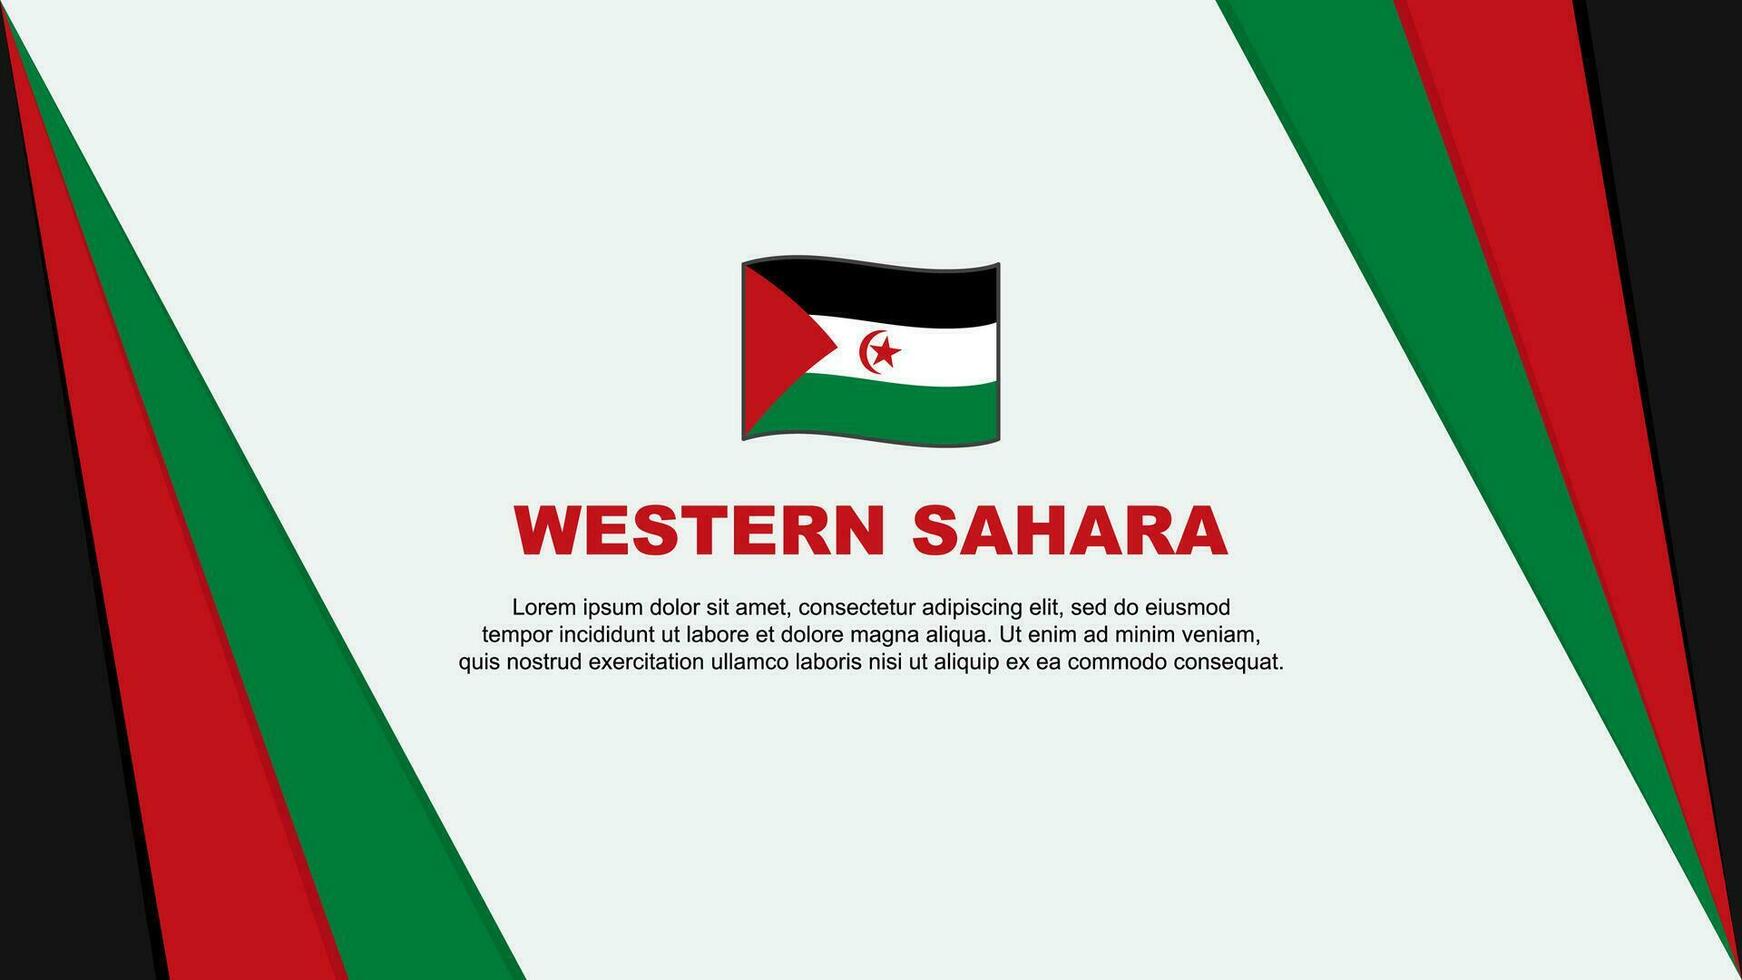 Western Sahara Flag Abstract Background Design Template. Western Sahara Independence Day Banner Cartoon Vector Illustration. Western Sahara Flag